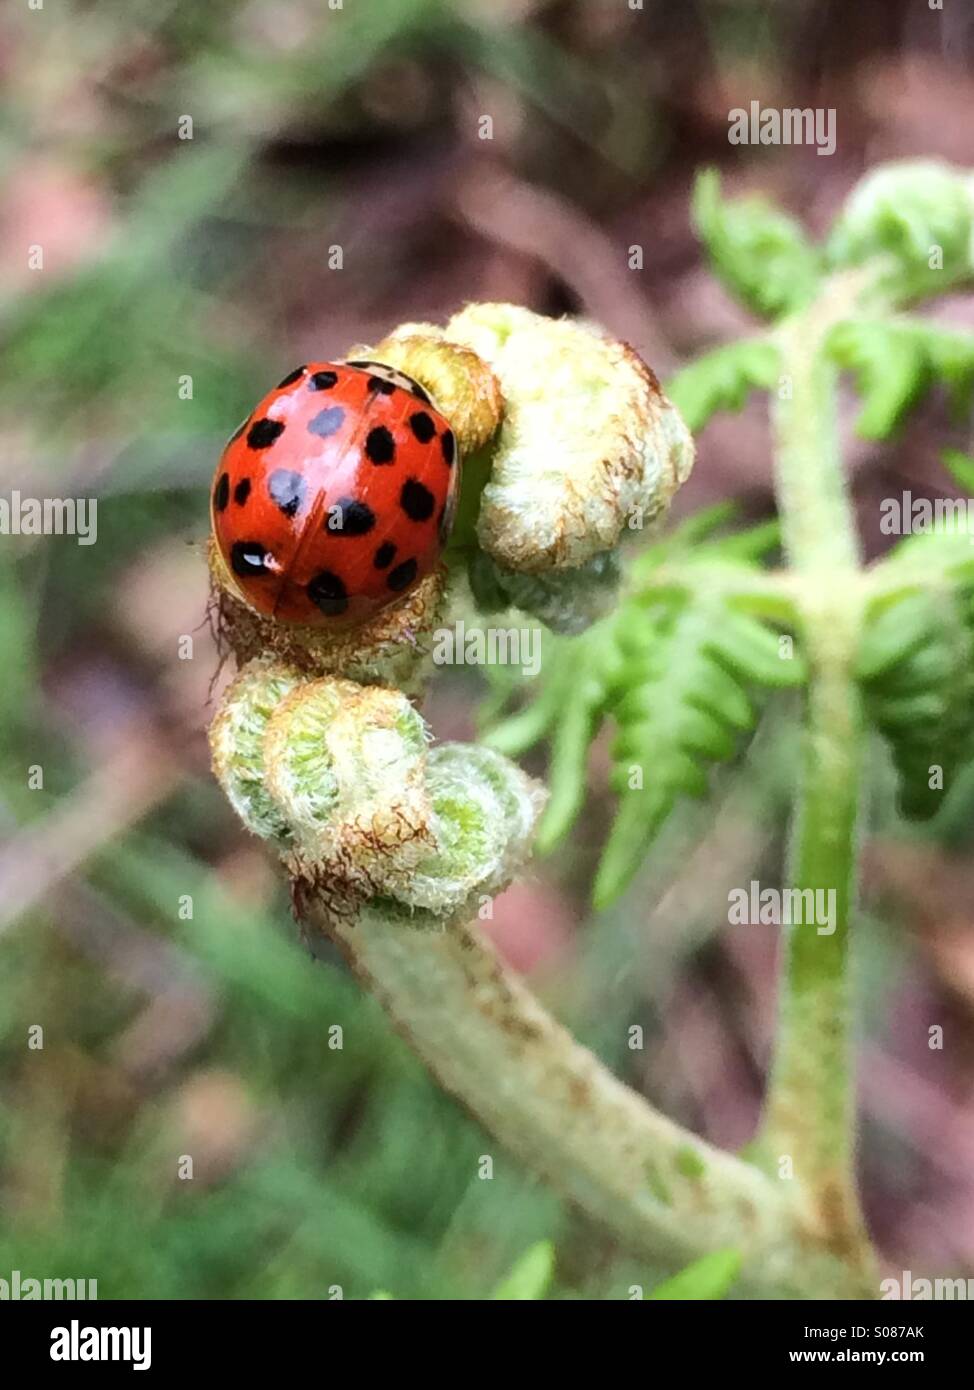 Ladybird on an unfurled fern Stock Photo